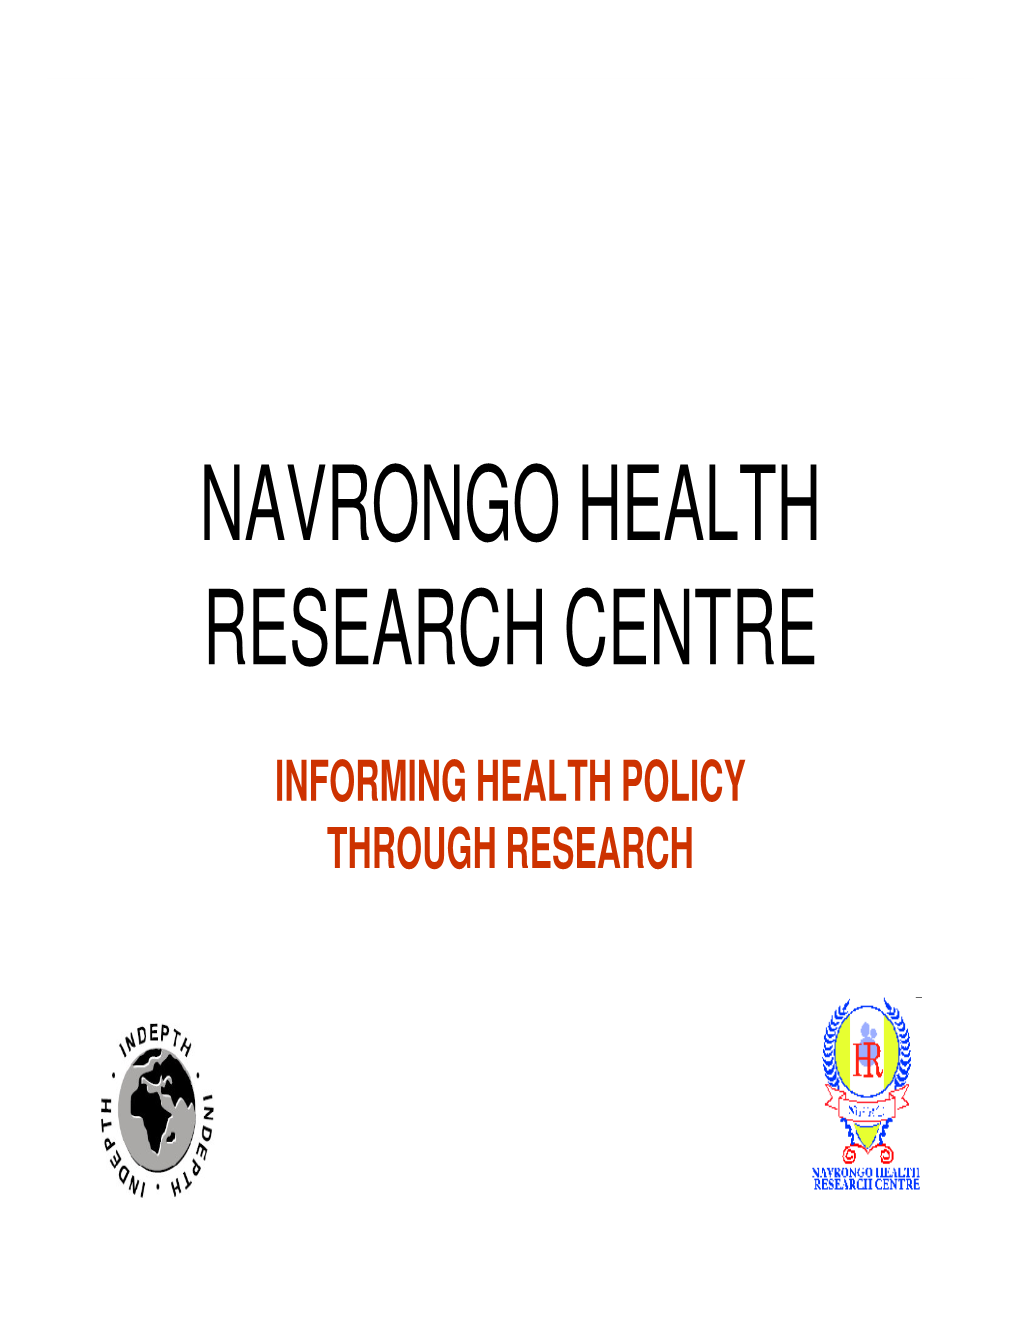 Navrongo Health Research Centre